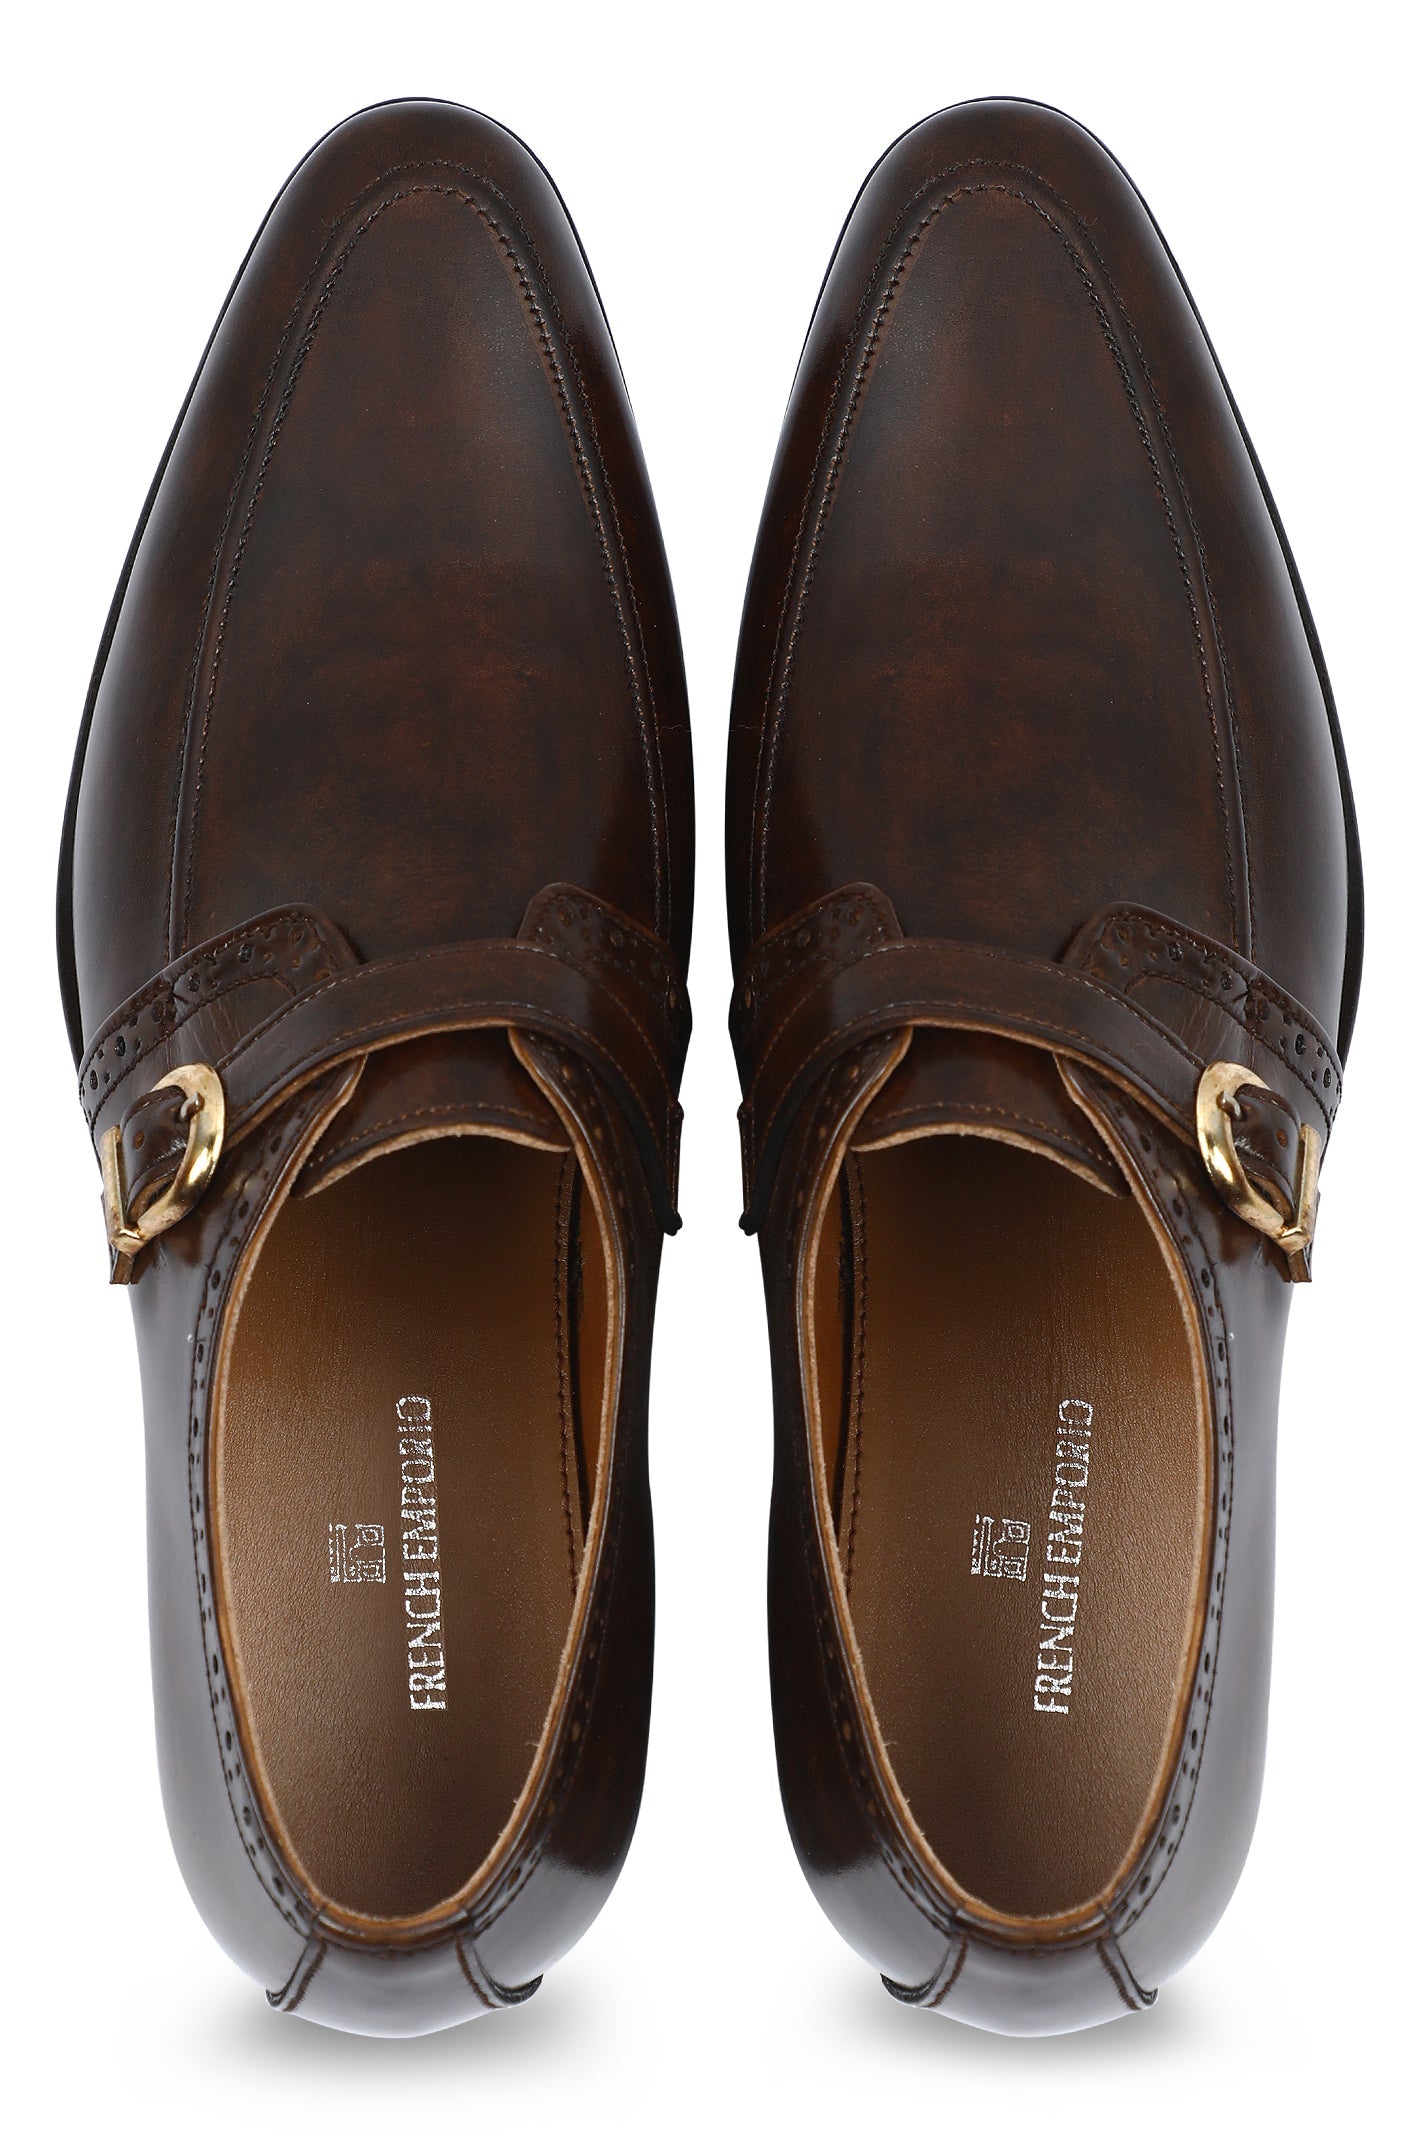 Formal Shoes For Men in Brown SKU: SMF-0228-BROWN - Diners